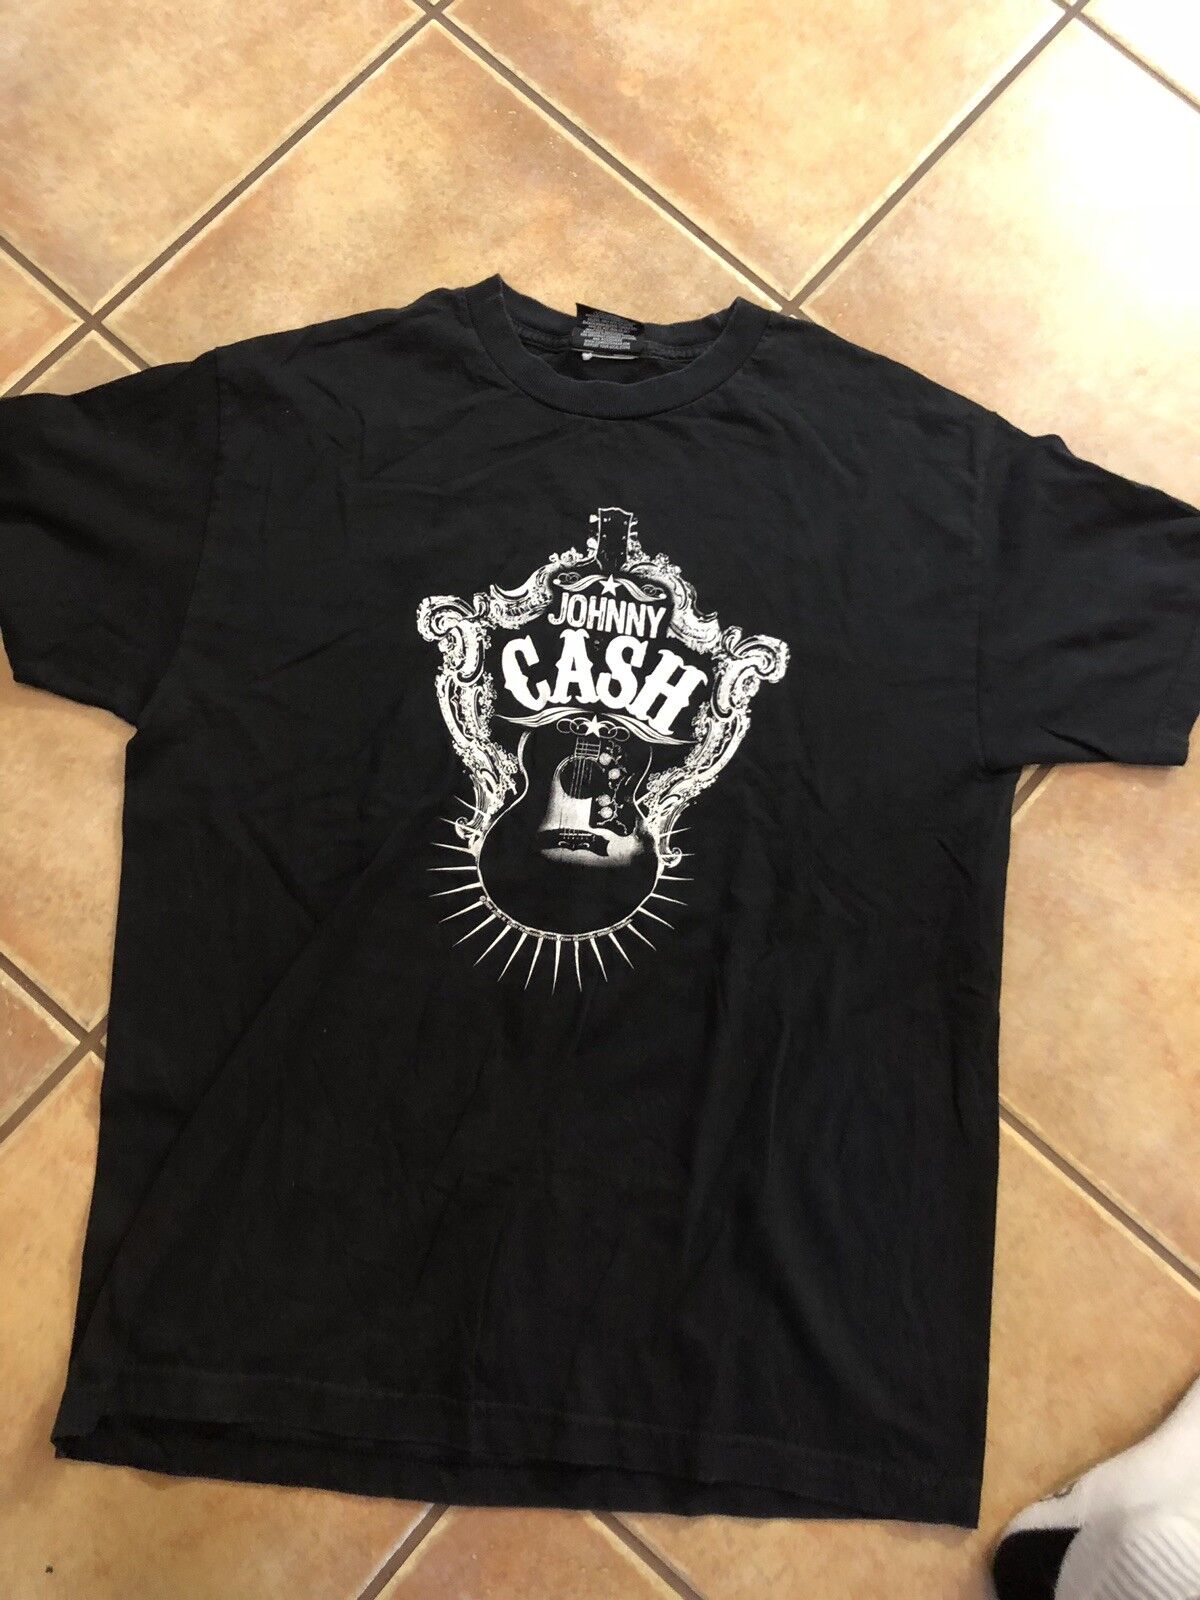 2006 JOHNNY CASH "Man in Black" Guitar Size Large T-Shirt